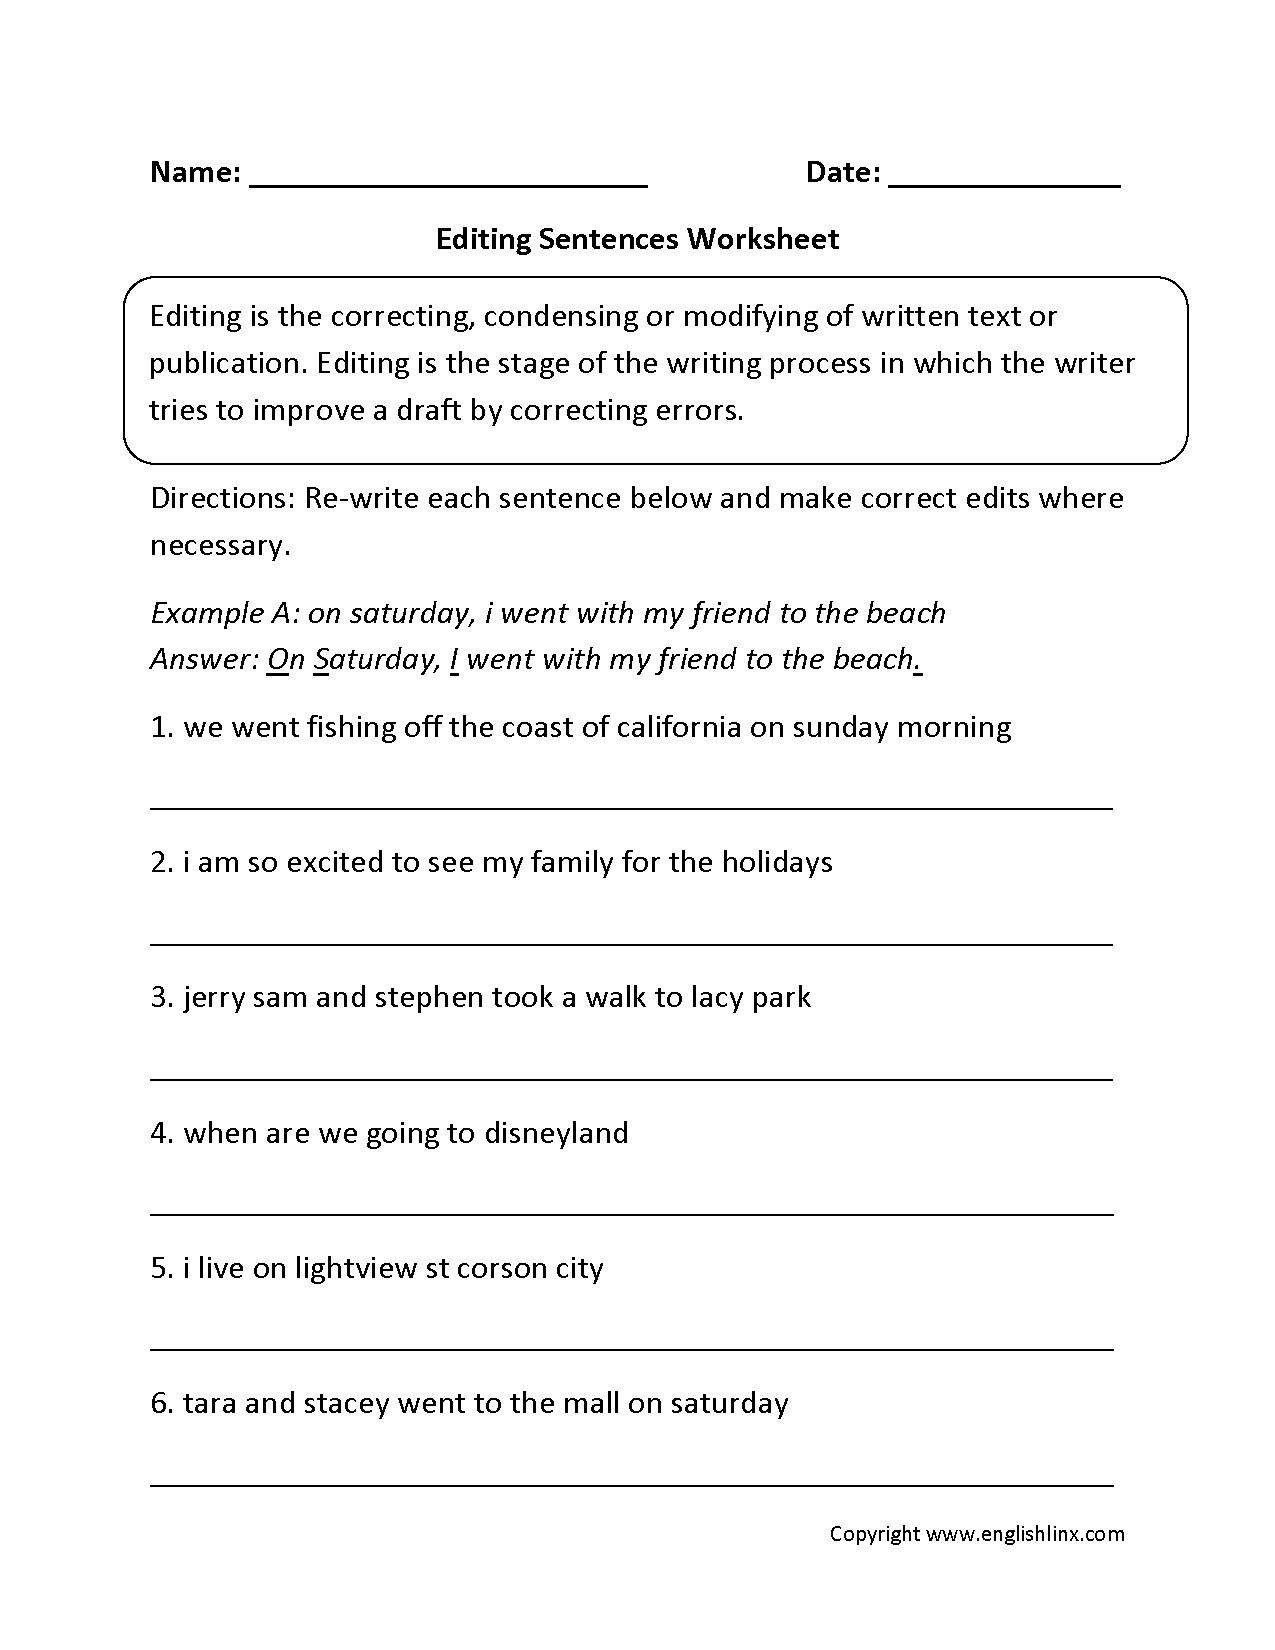 Writing Worksheets | Editing Worksheets - Free Printable Sentence Correction Worksheets